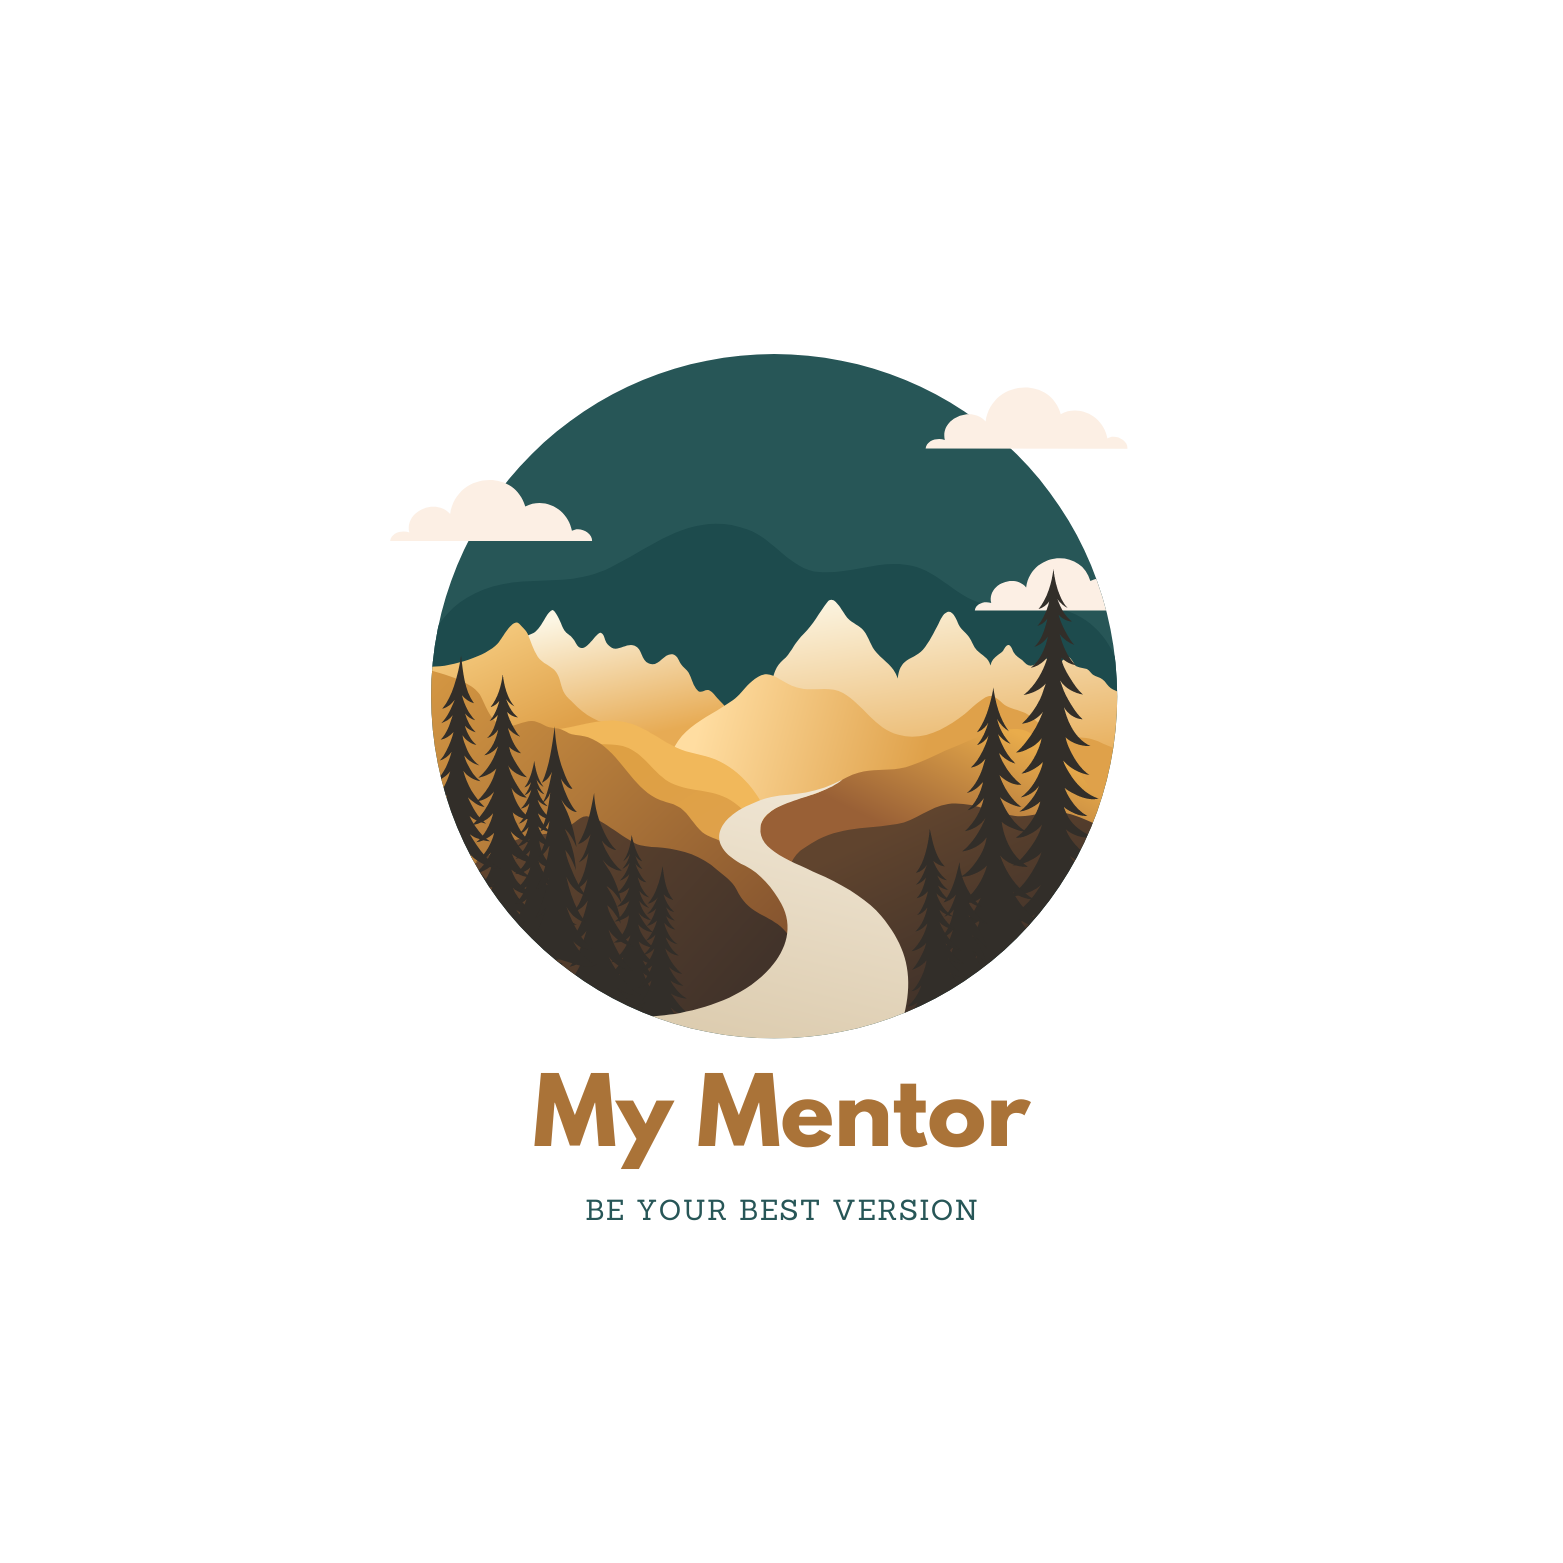 MyMentor logo